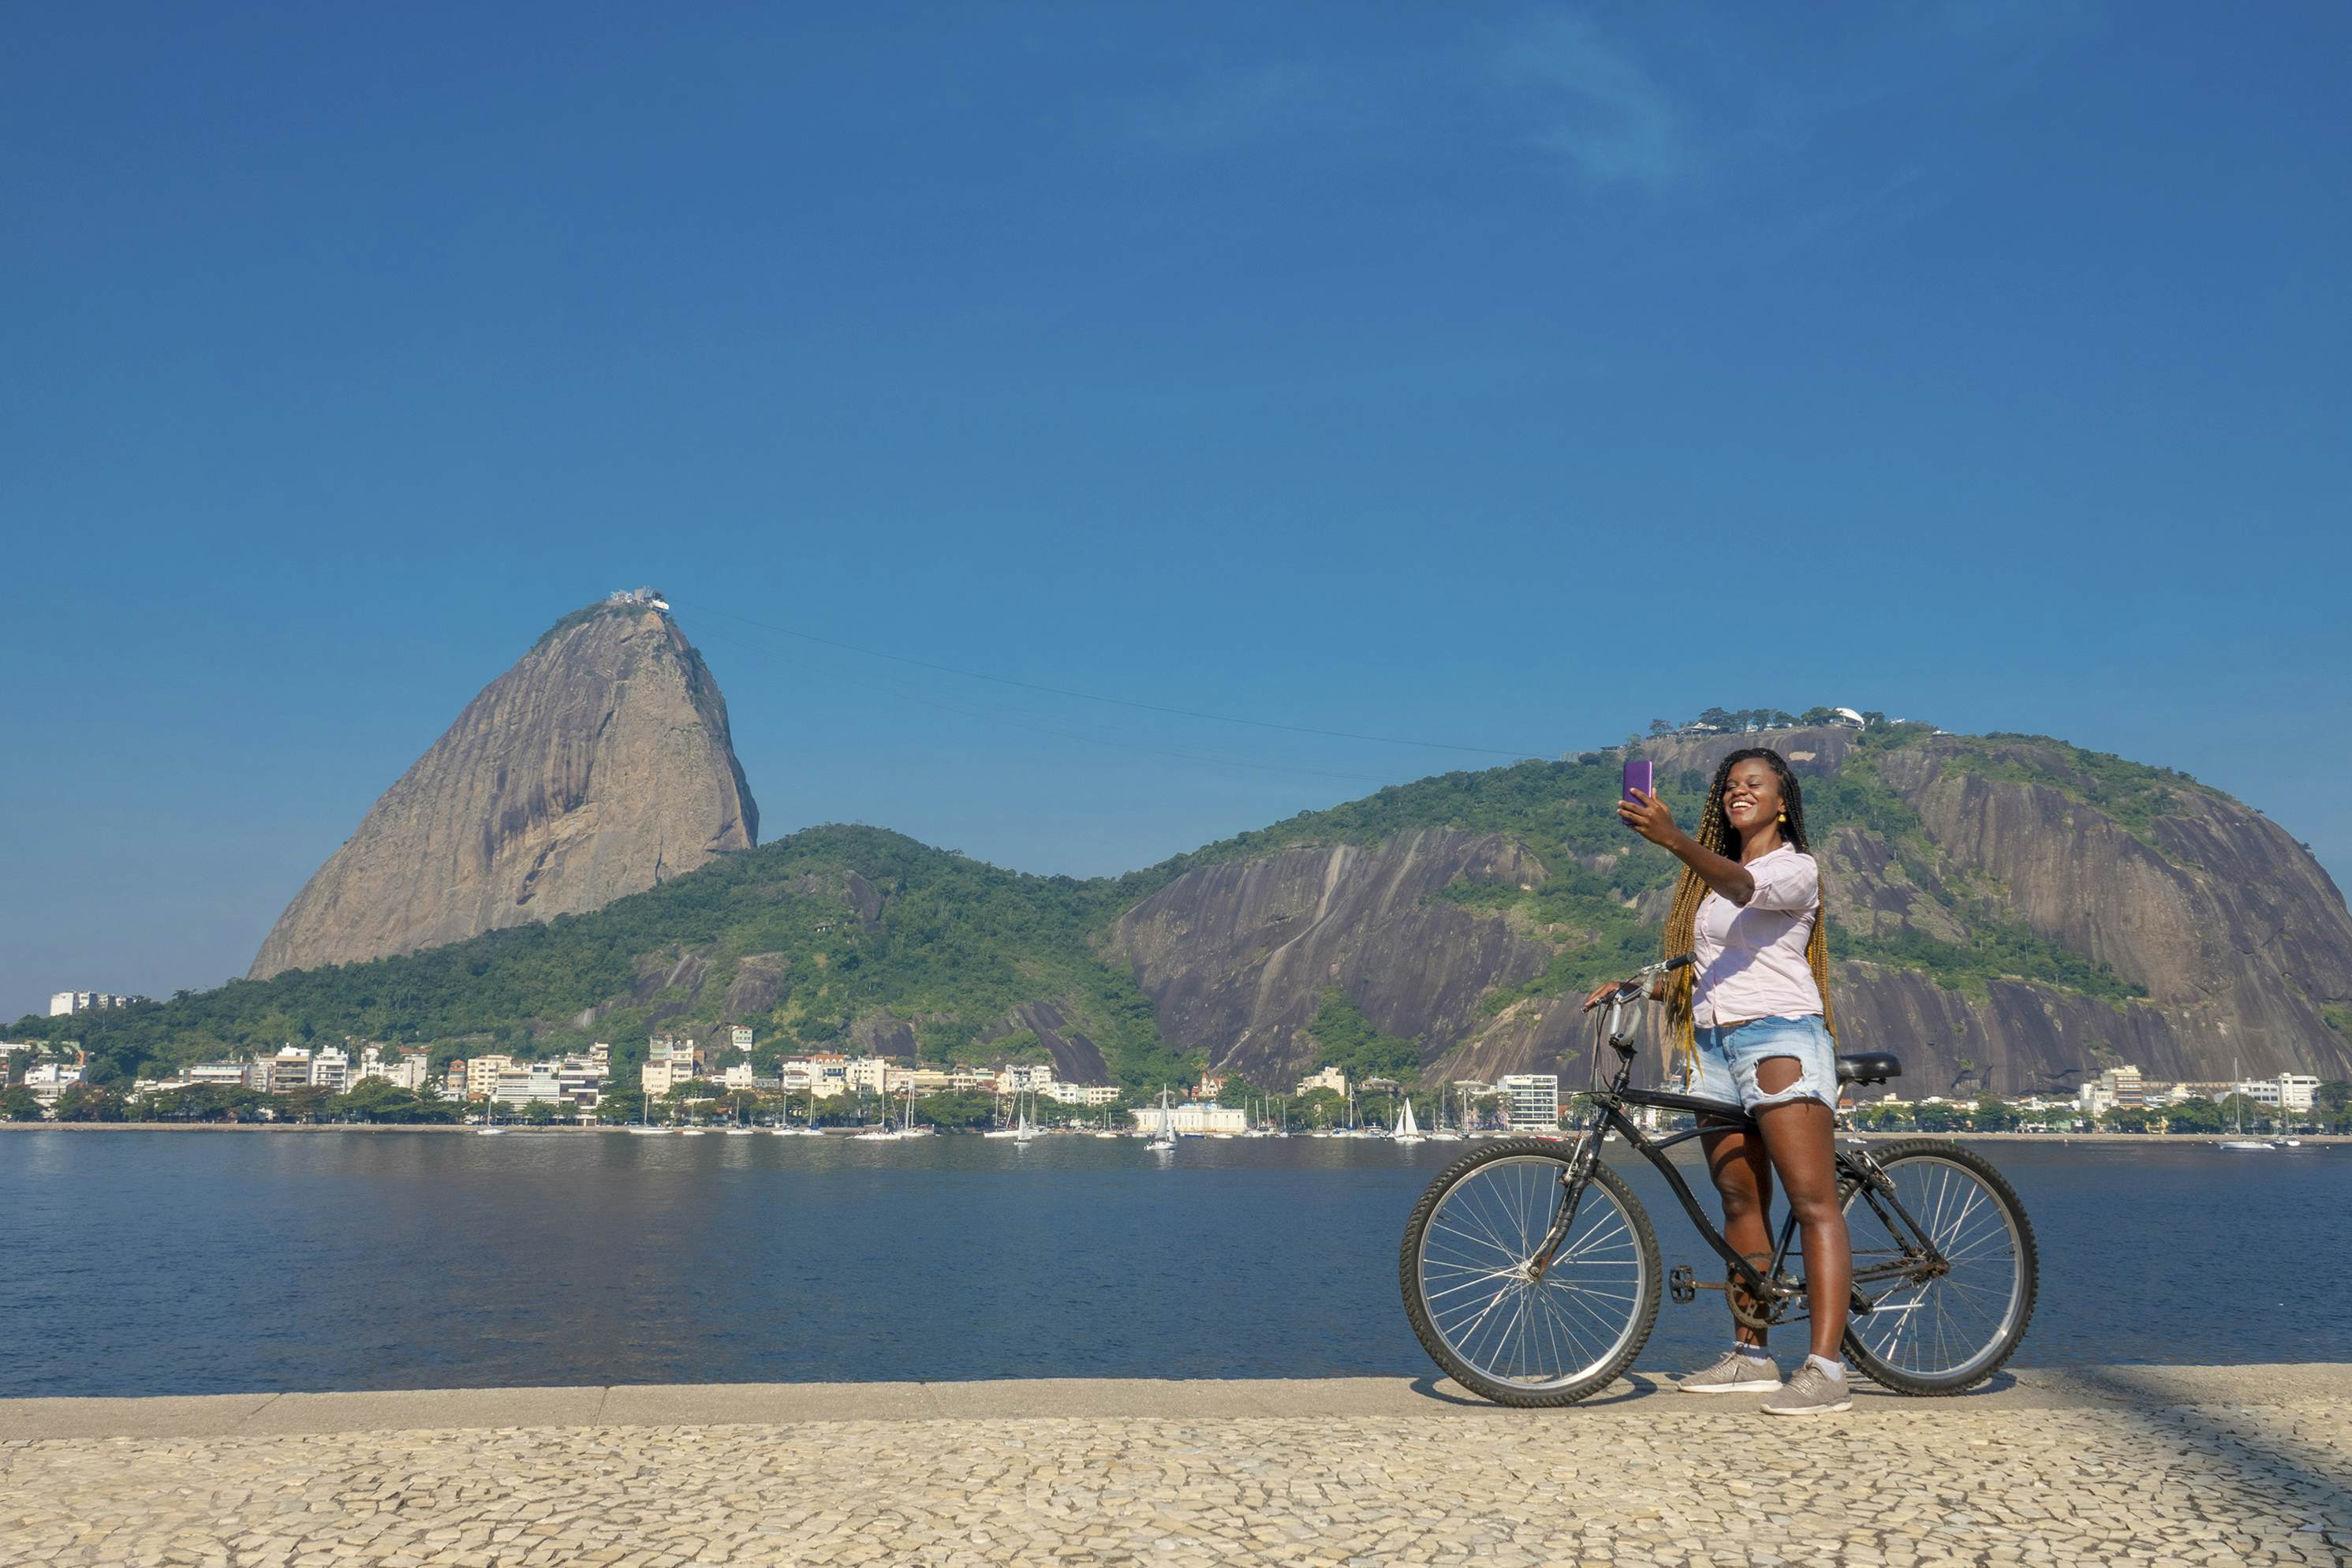 Take a whimsical tour of Brazil